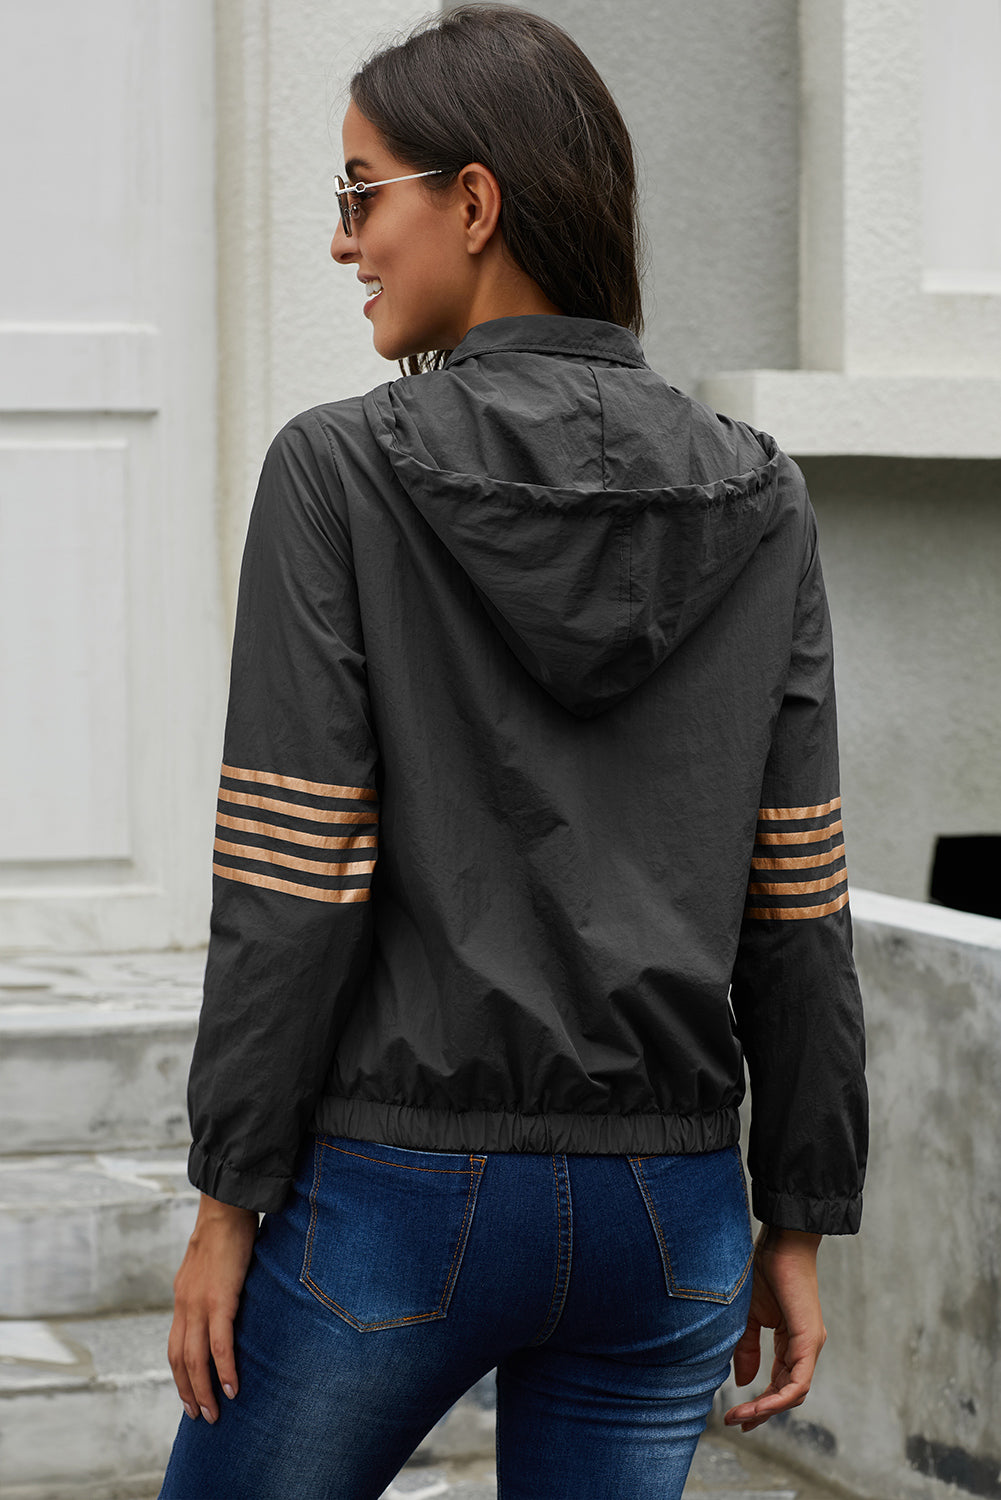 Striped Sleeve Drawstring Jacket with Zipper Pockets